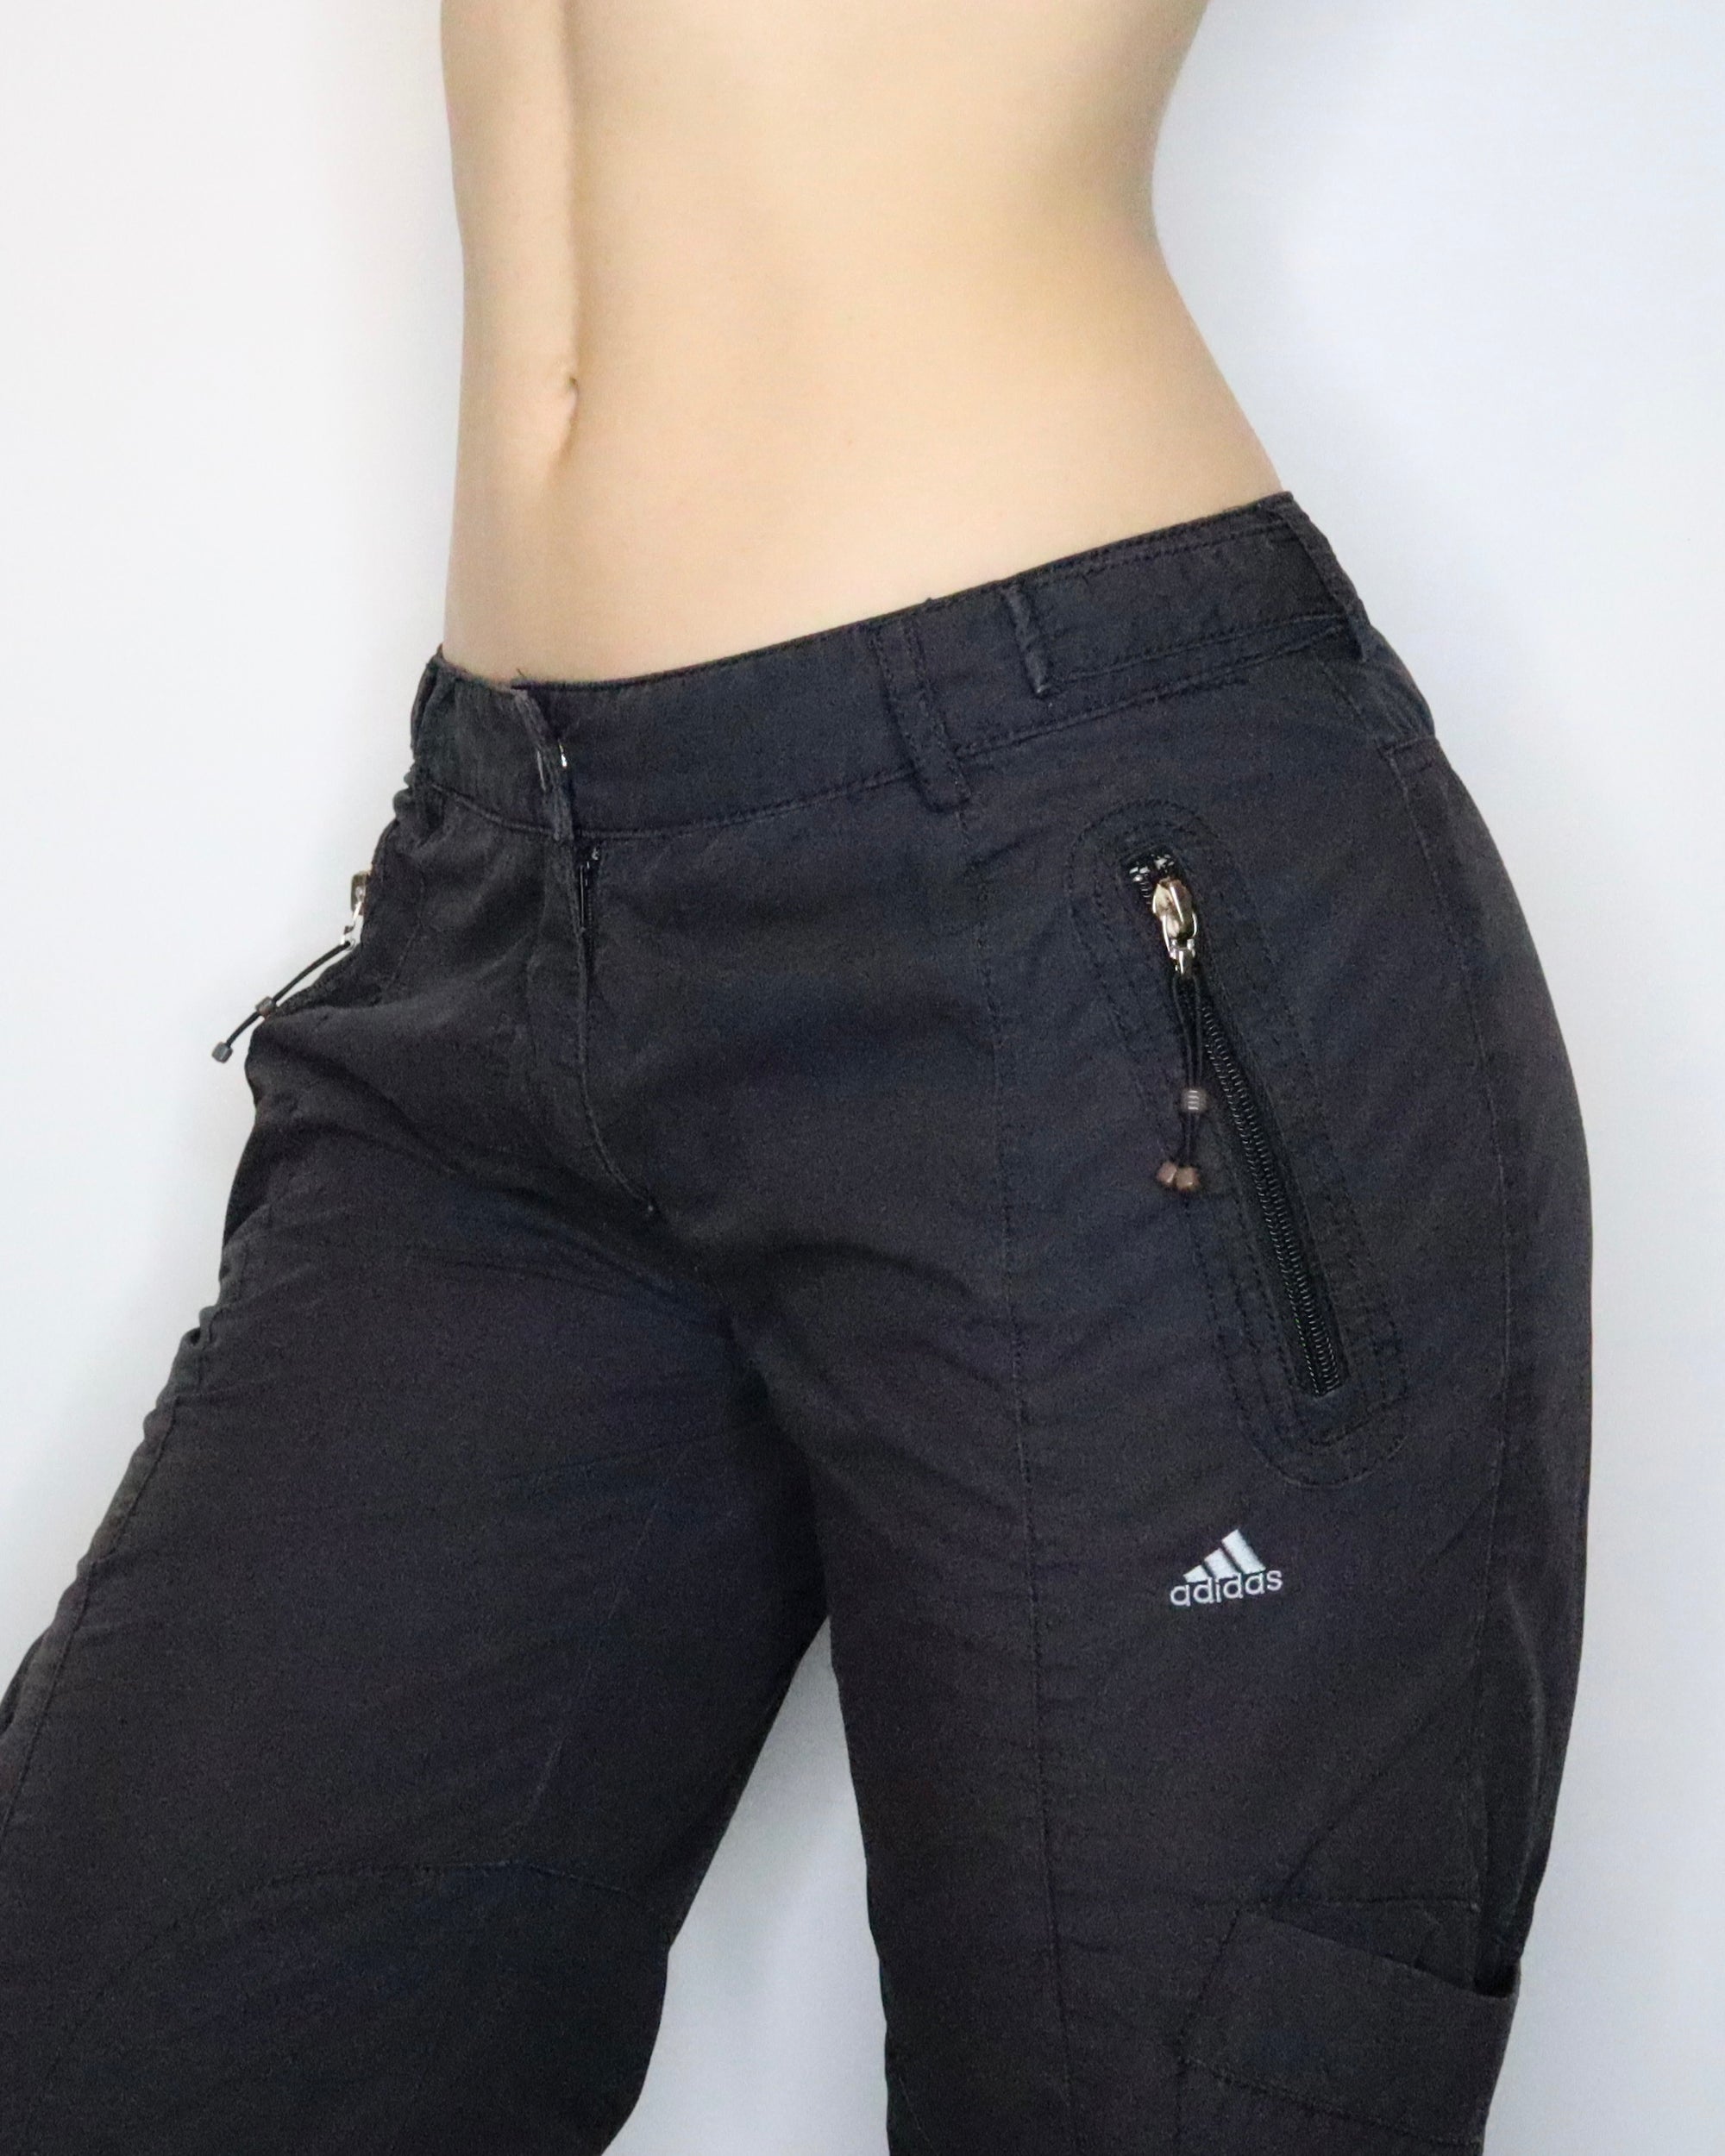 Adidas Baggy Cargo Pants (S-M) 